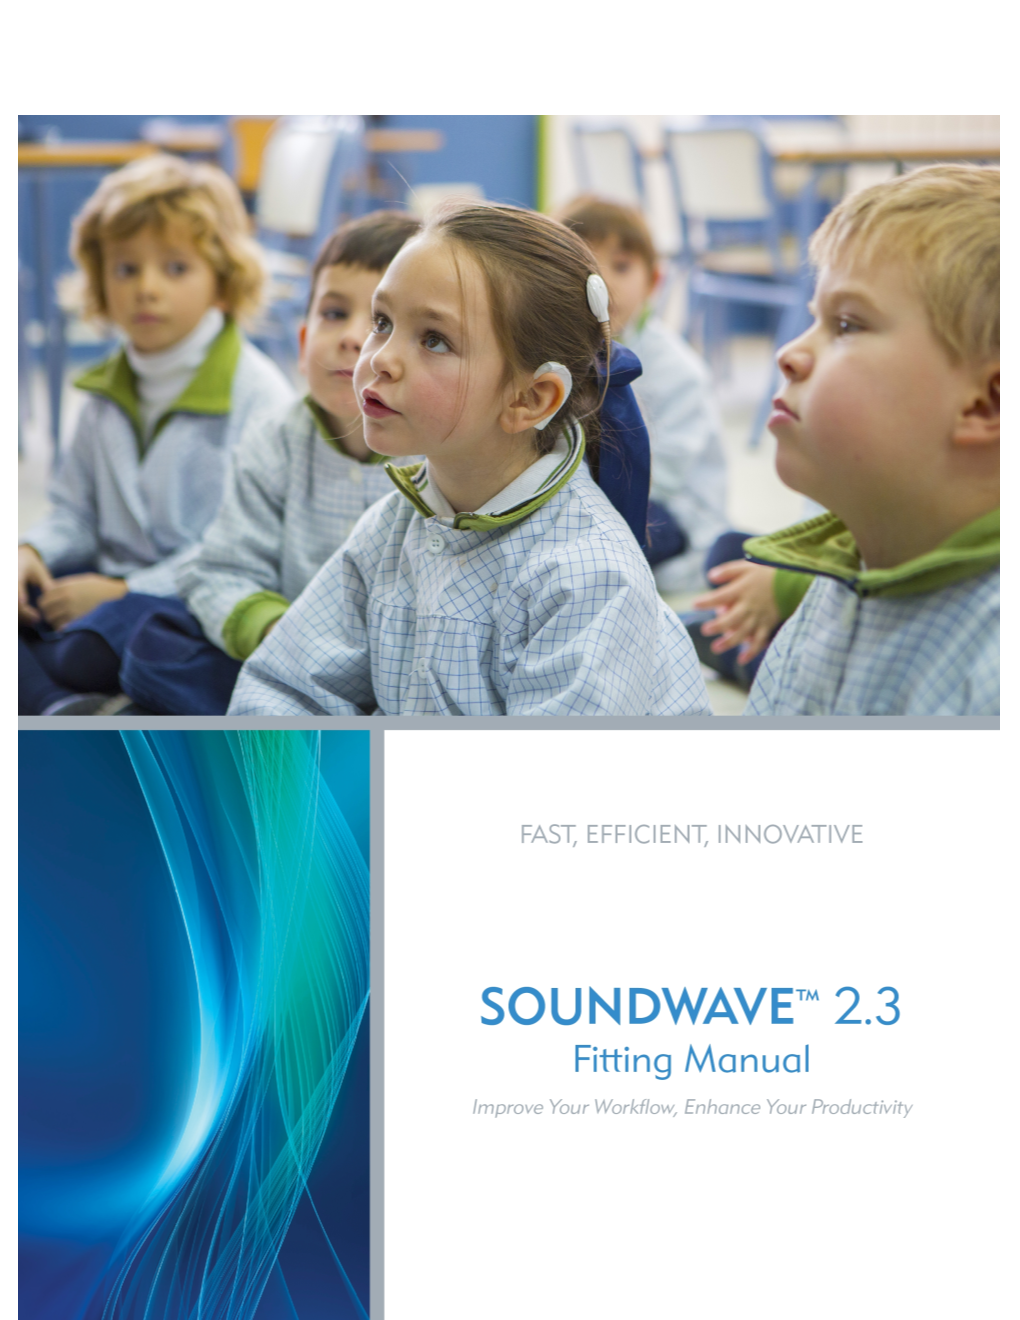 Soundwave 2.3 Fitting Manual